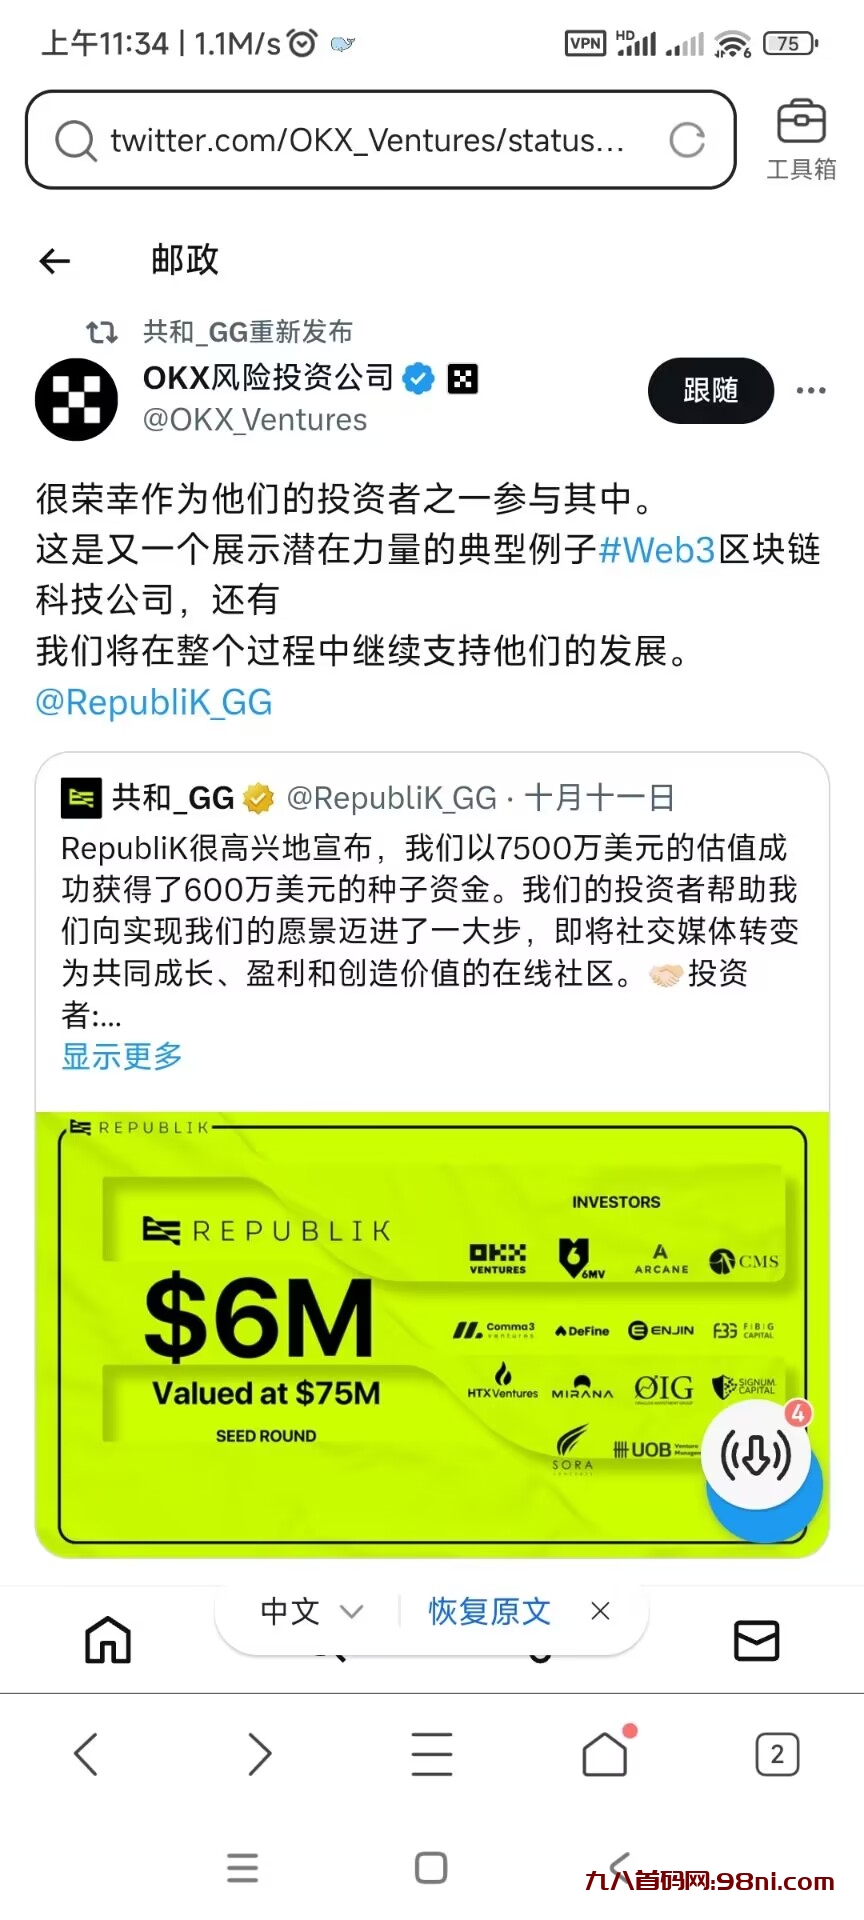 RepubliK_GG明牌空投-首码网-网上创业赚钱首码项目发布推广平台